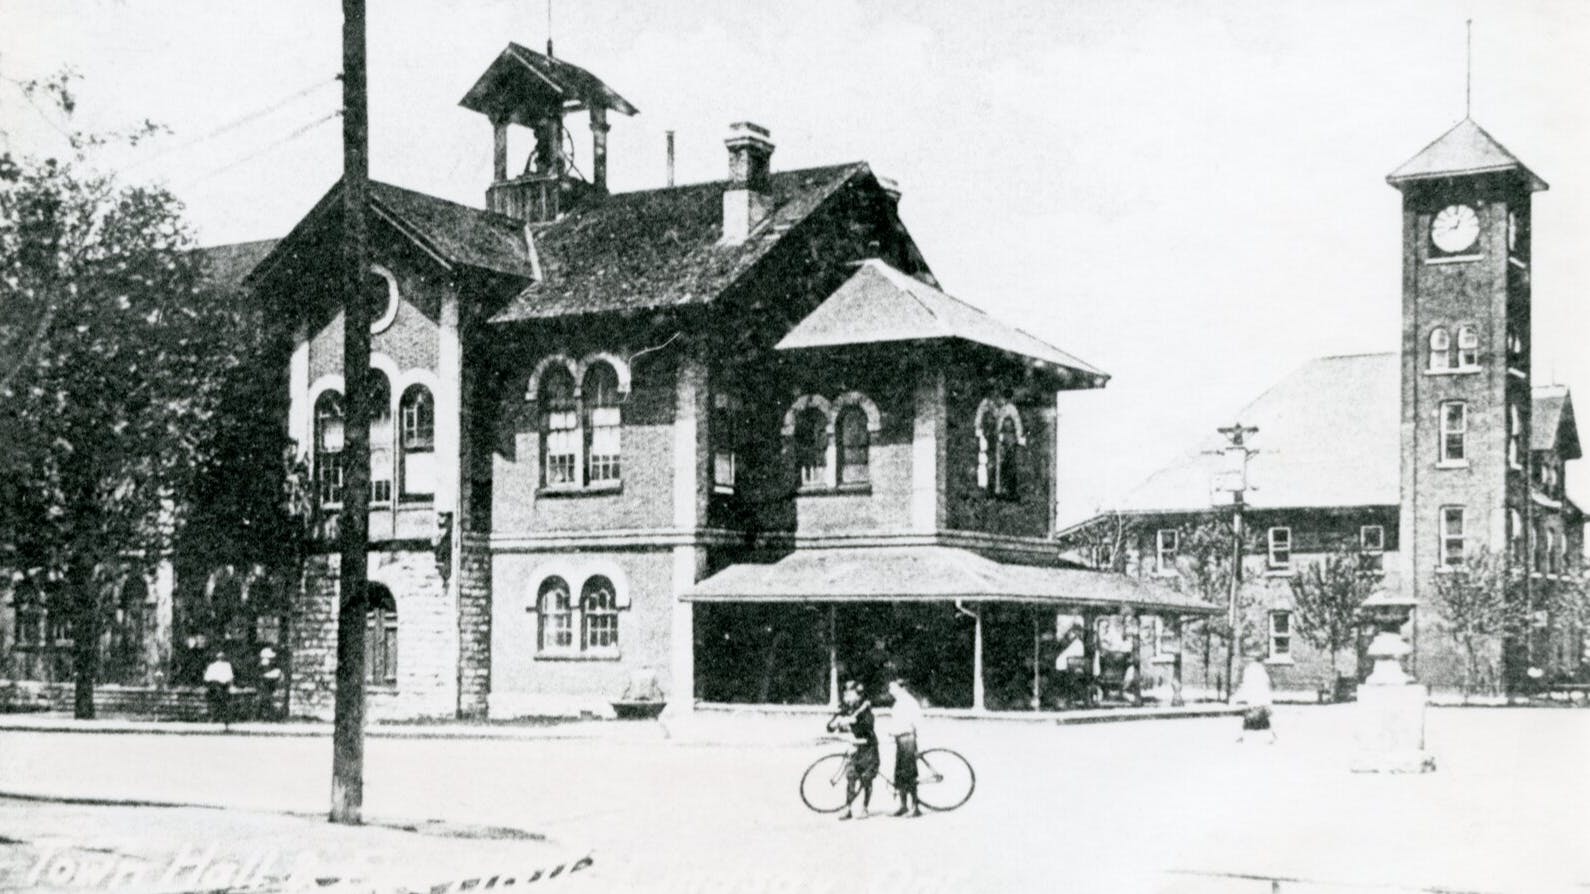 historic photo of Lindsay town hall